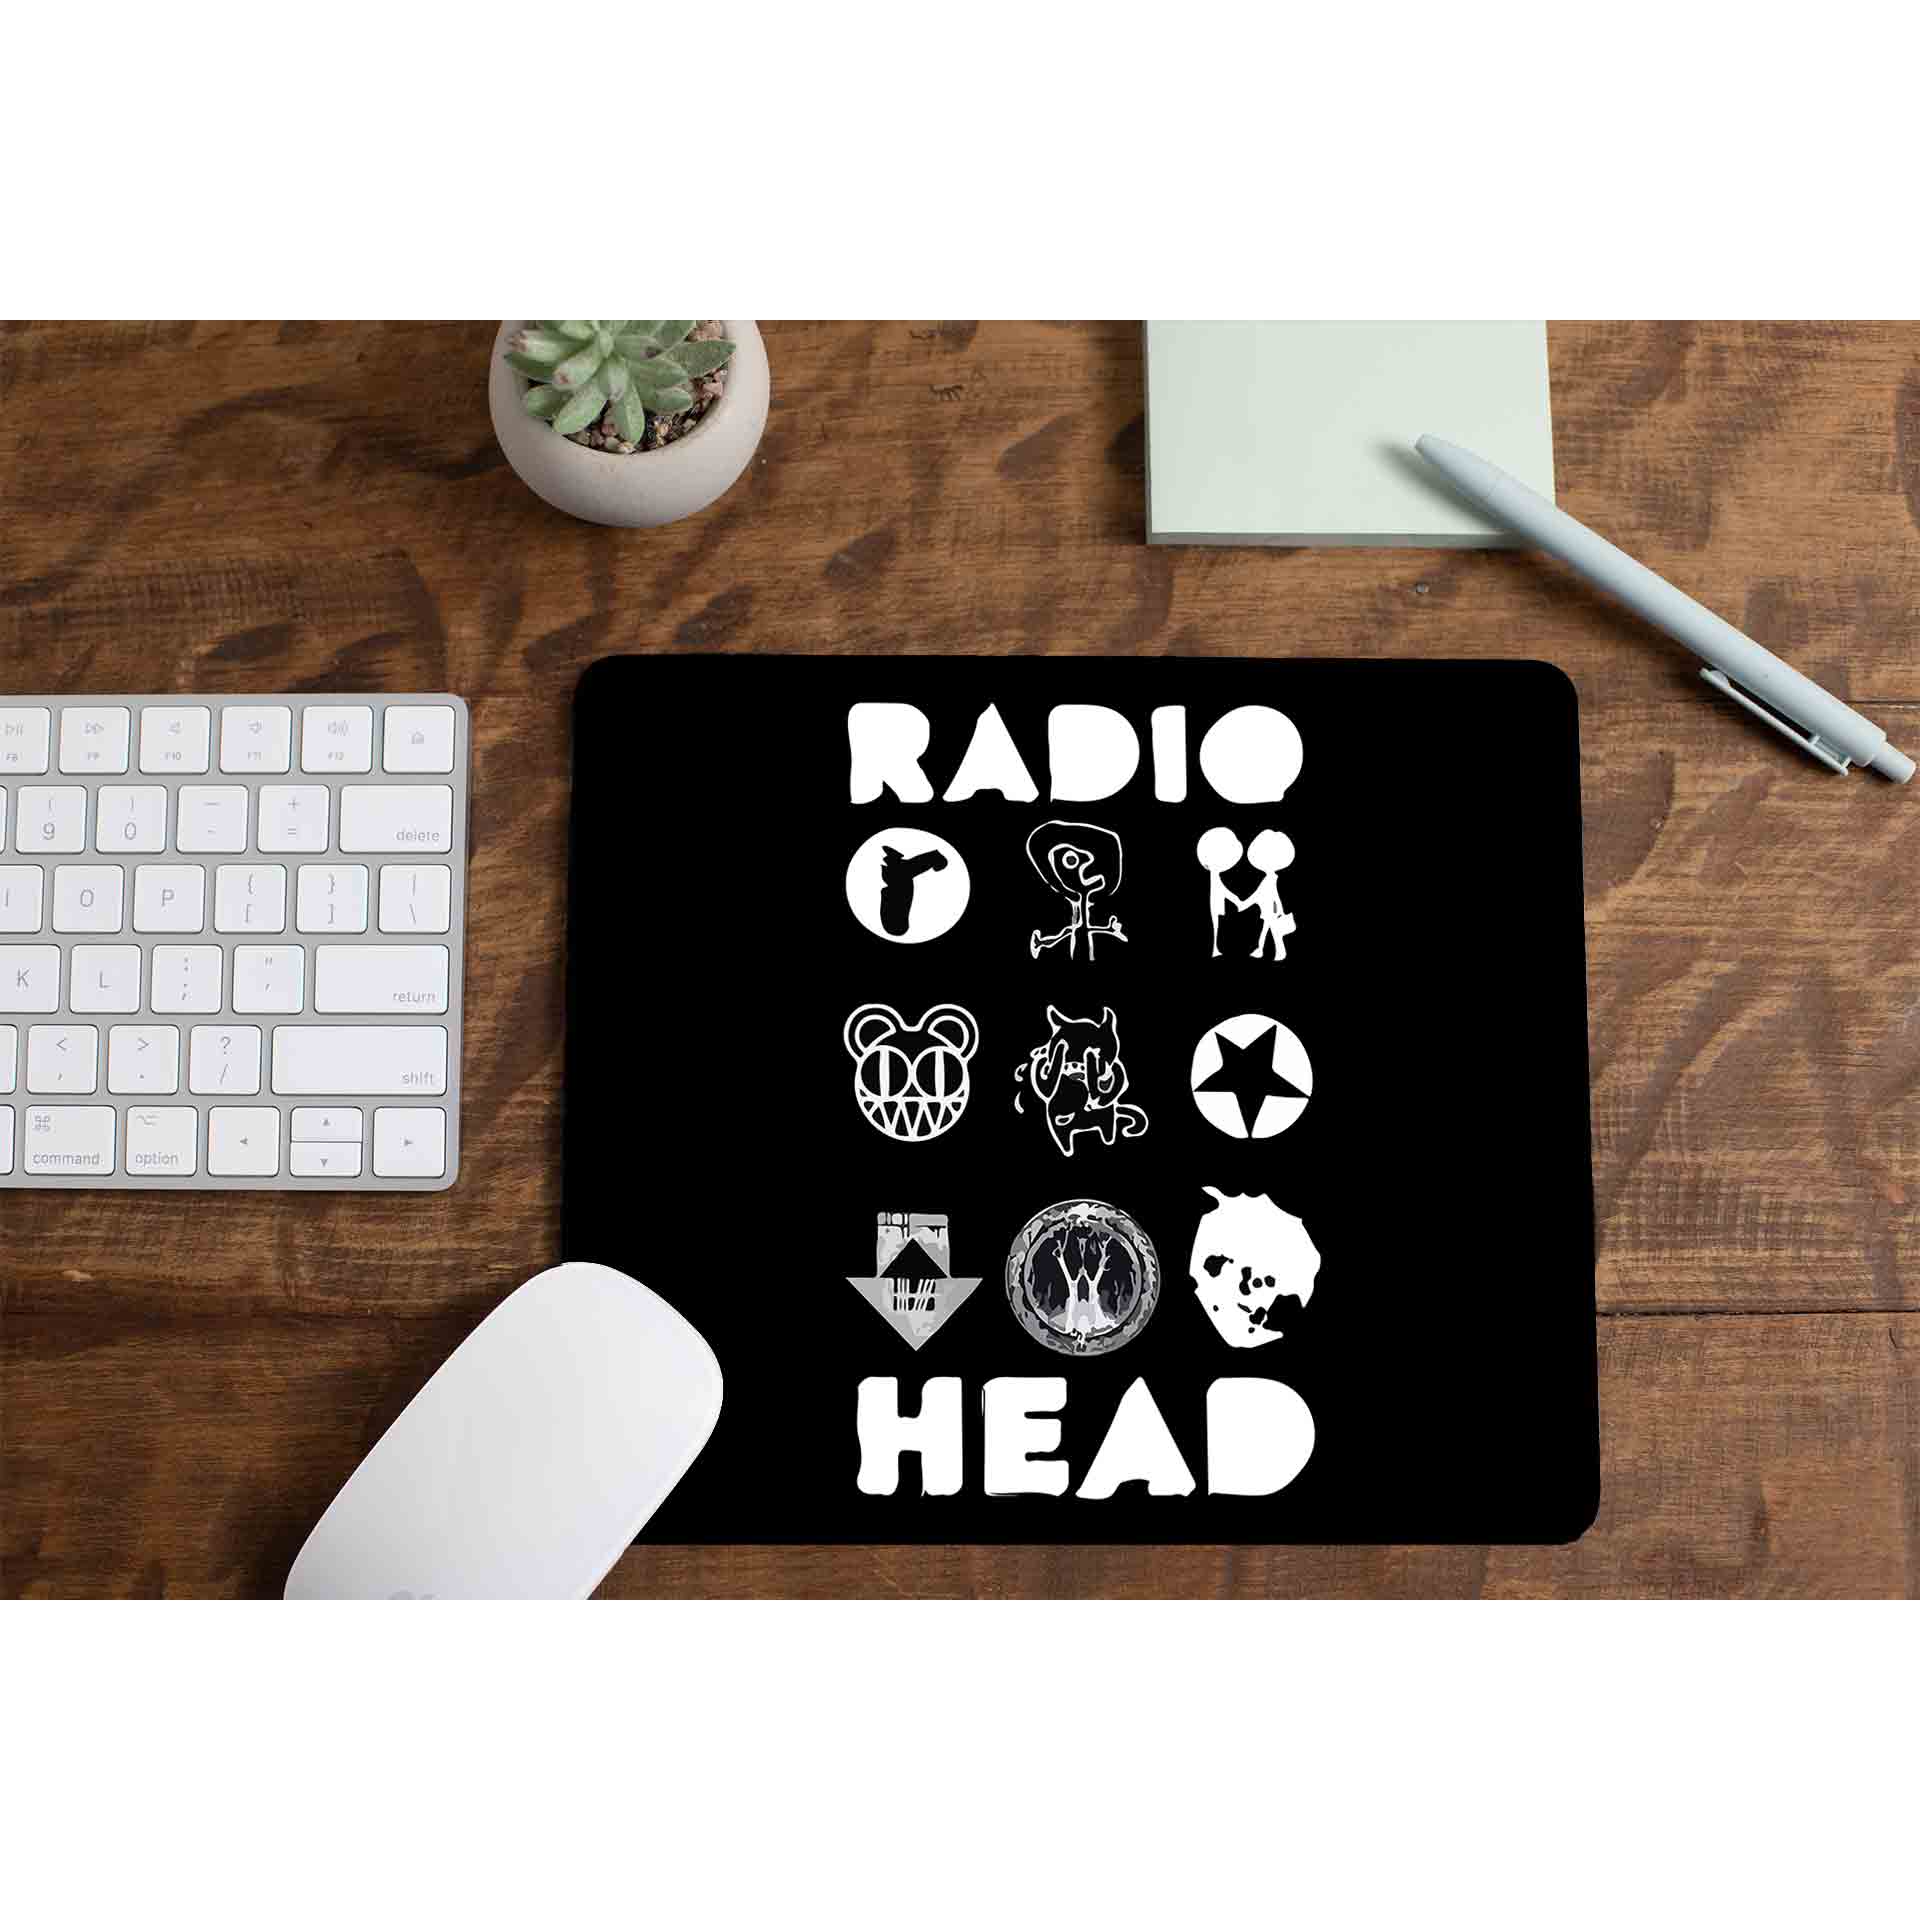 Radiohead Mousepad - Album Arts